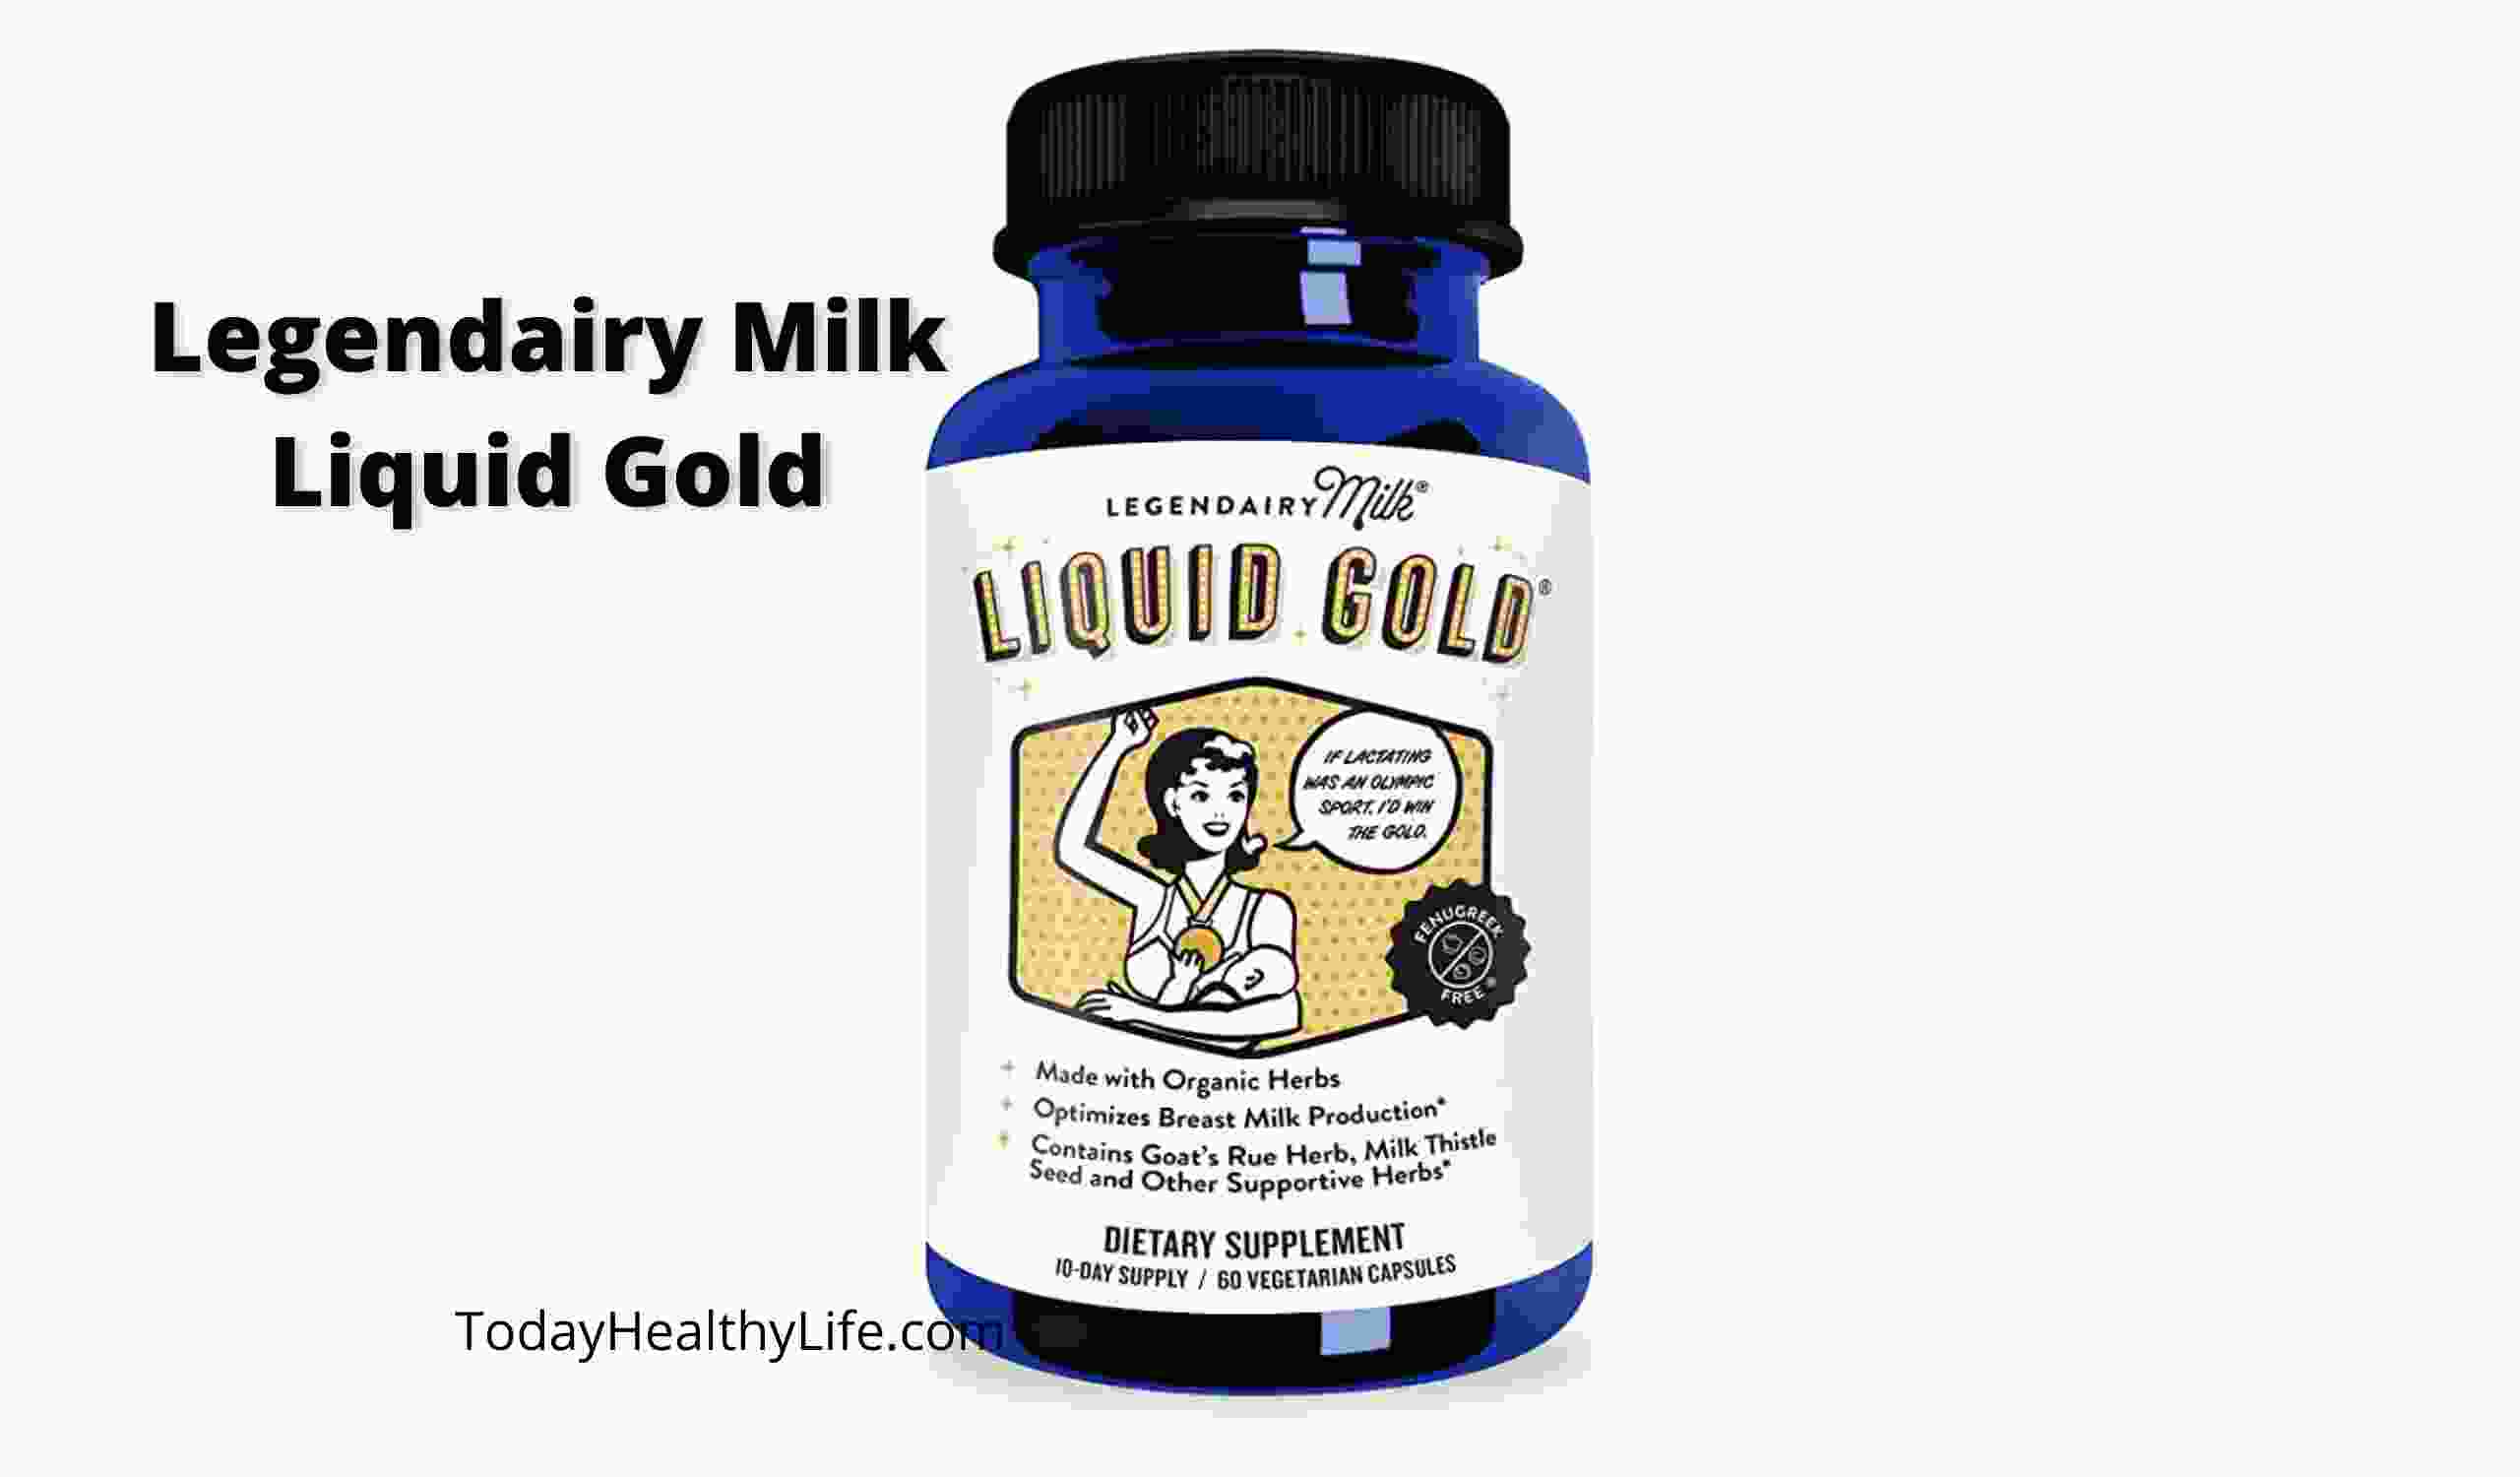 A bottle of Legendairy Milk Liquid Gold Supplement